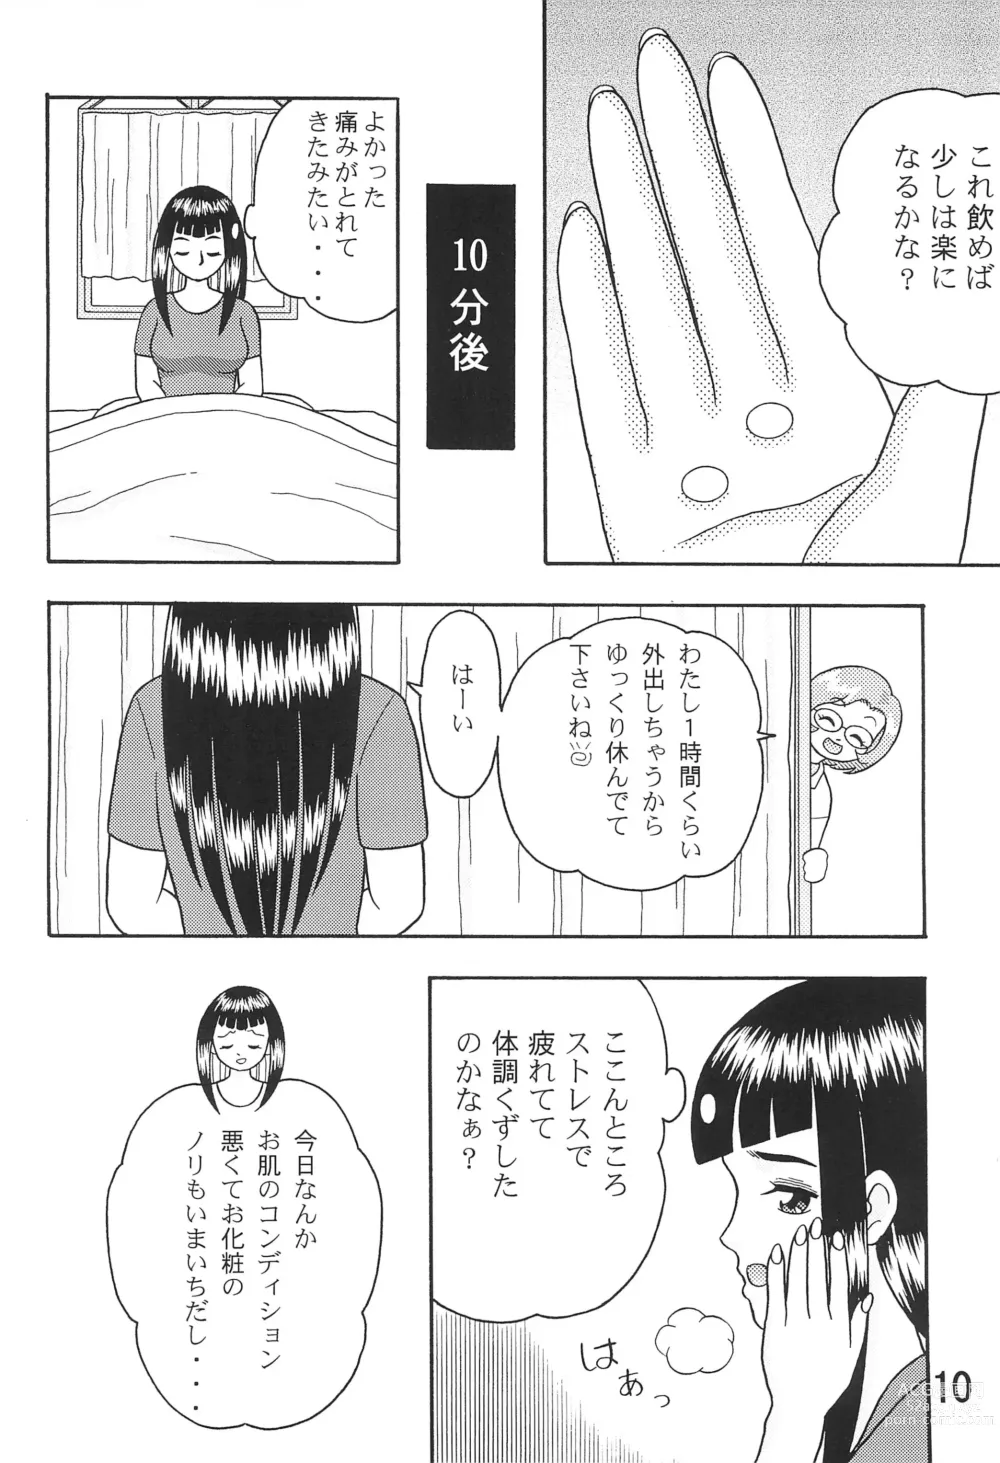 Page 12 of doujinshi 5 Nen 1 Kumi Mahougumi 2